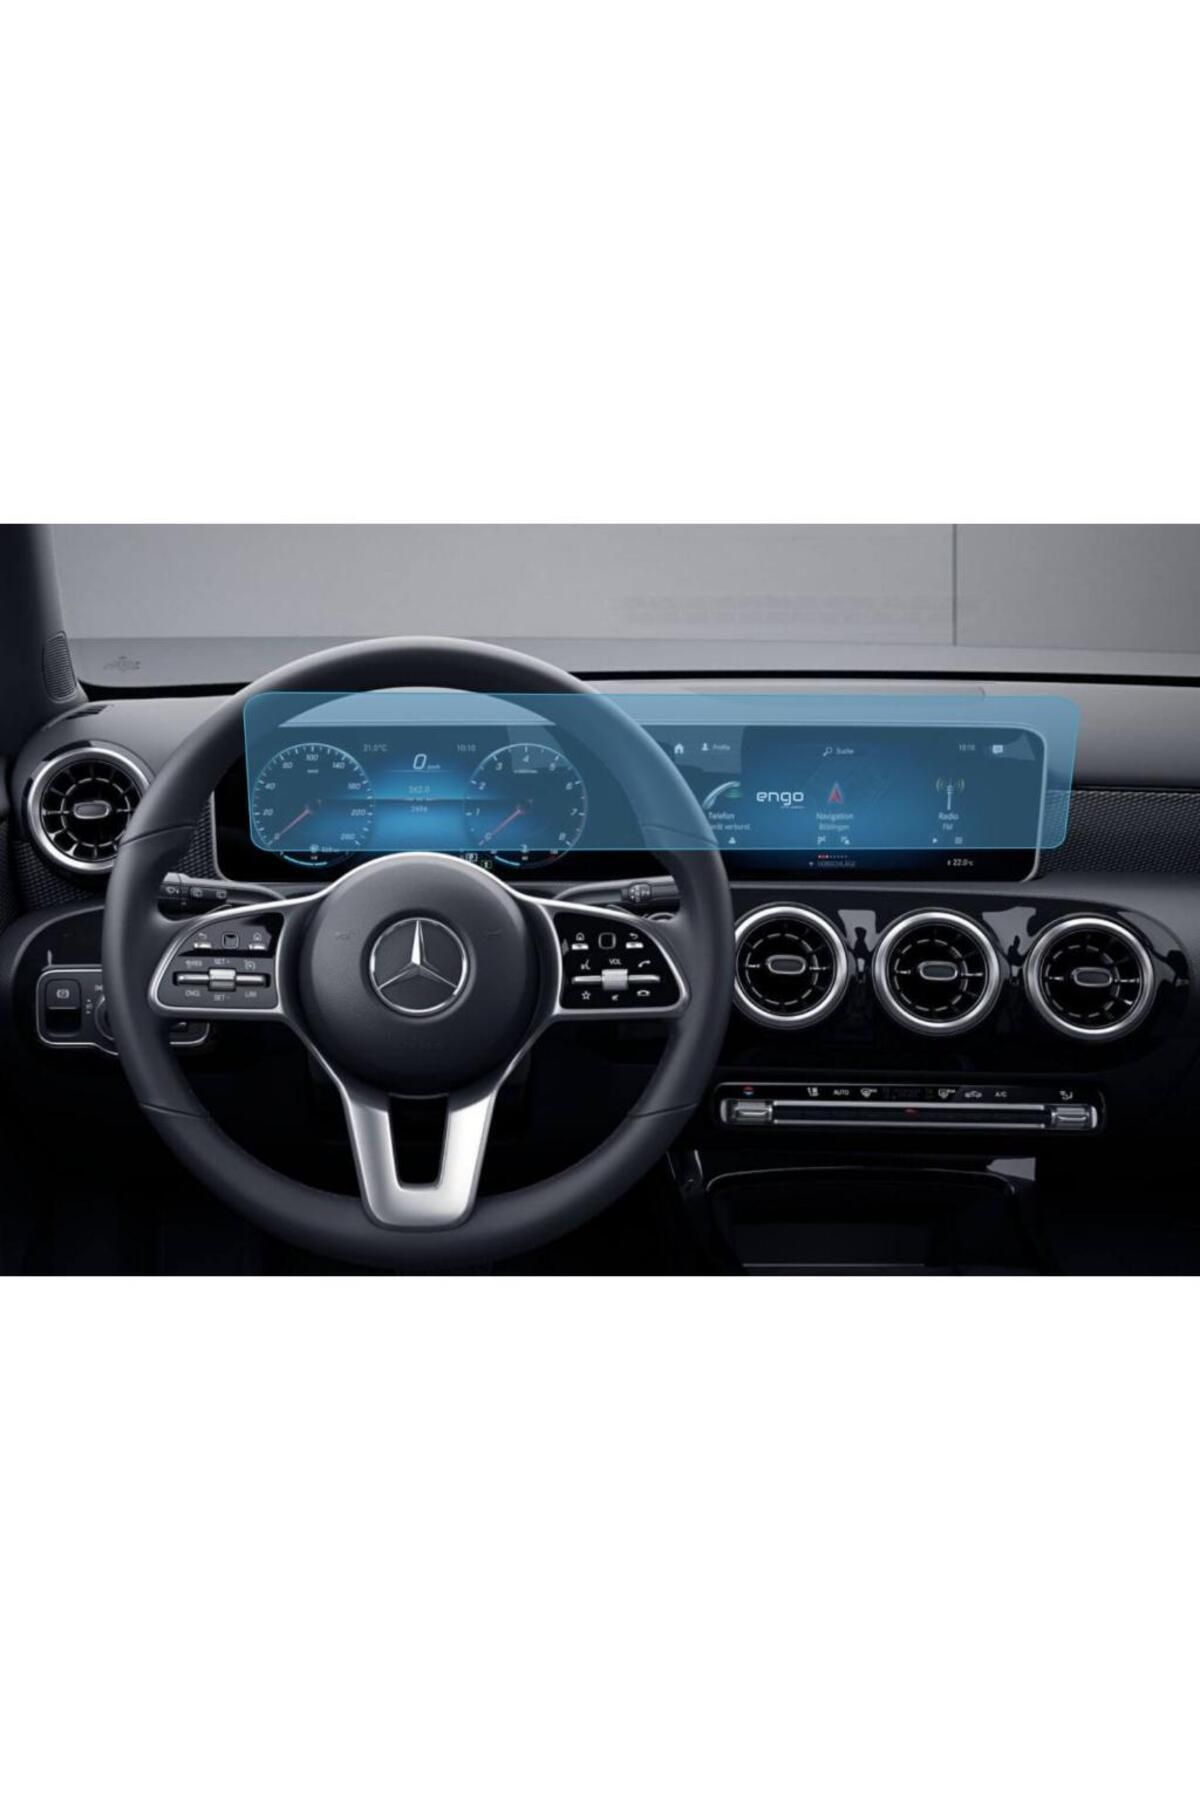 Engo Mercedes A180 Ekran Koruyucu Multimedya Ve Djital Ekran